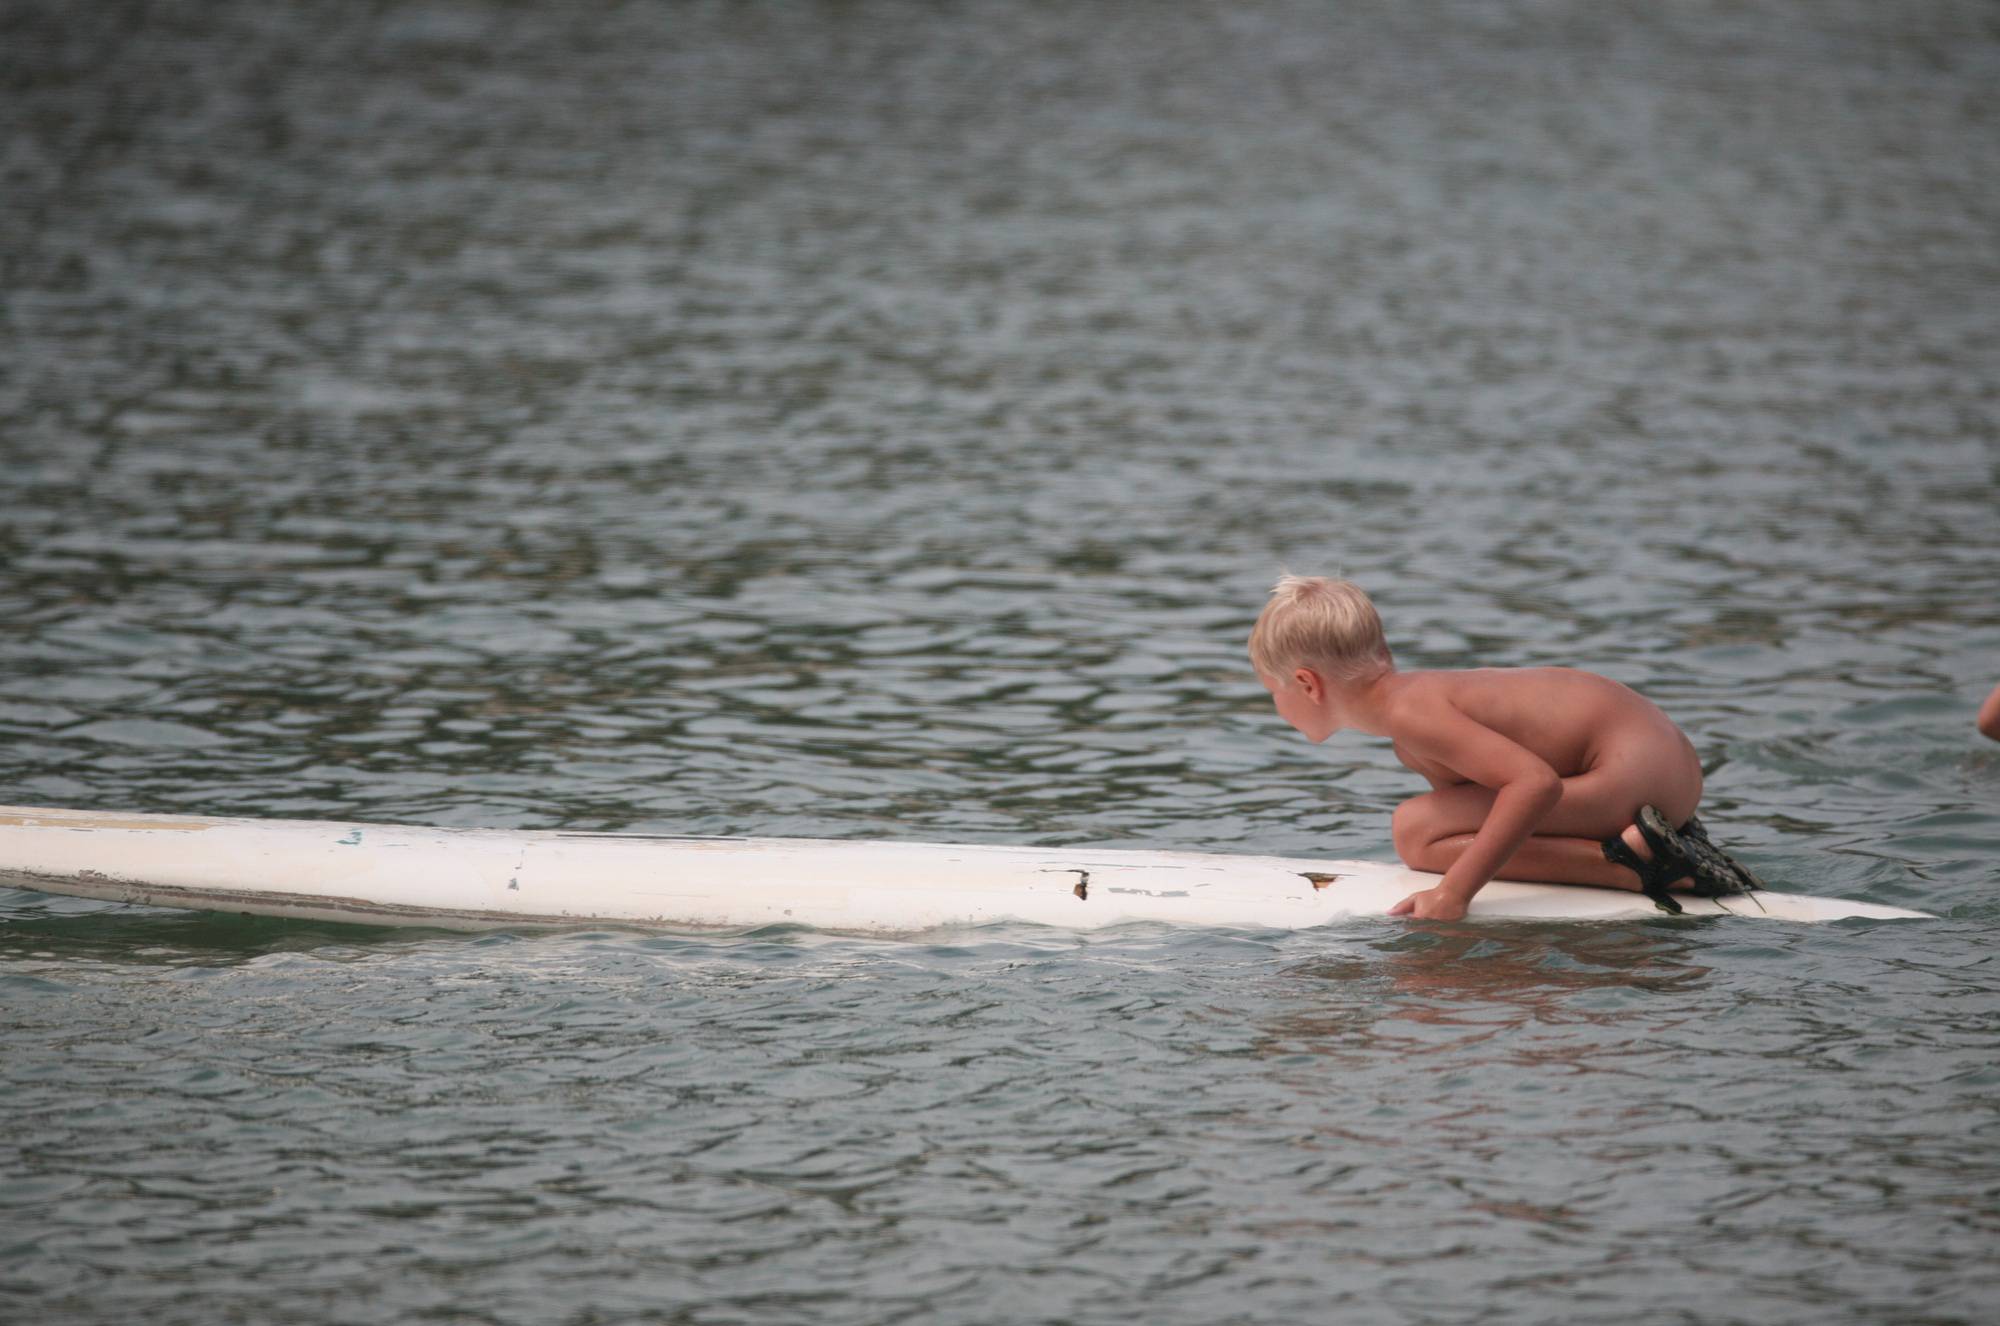 Pure Nudism Images-Naturist White Boy Surfer - 2